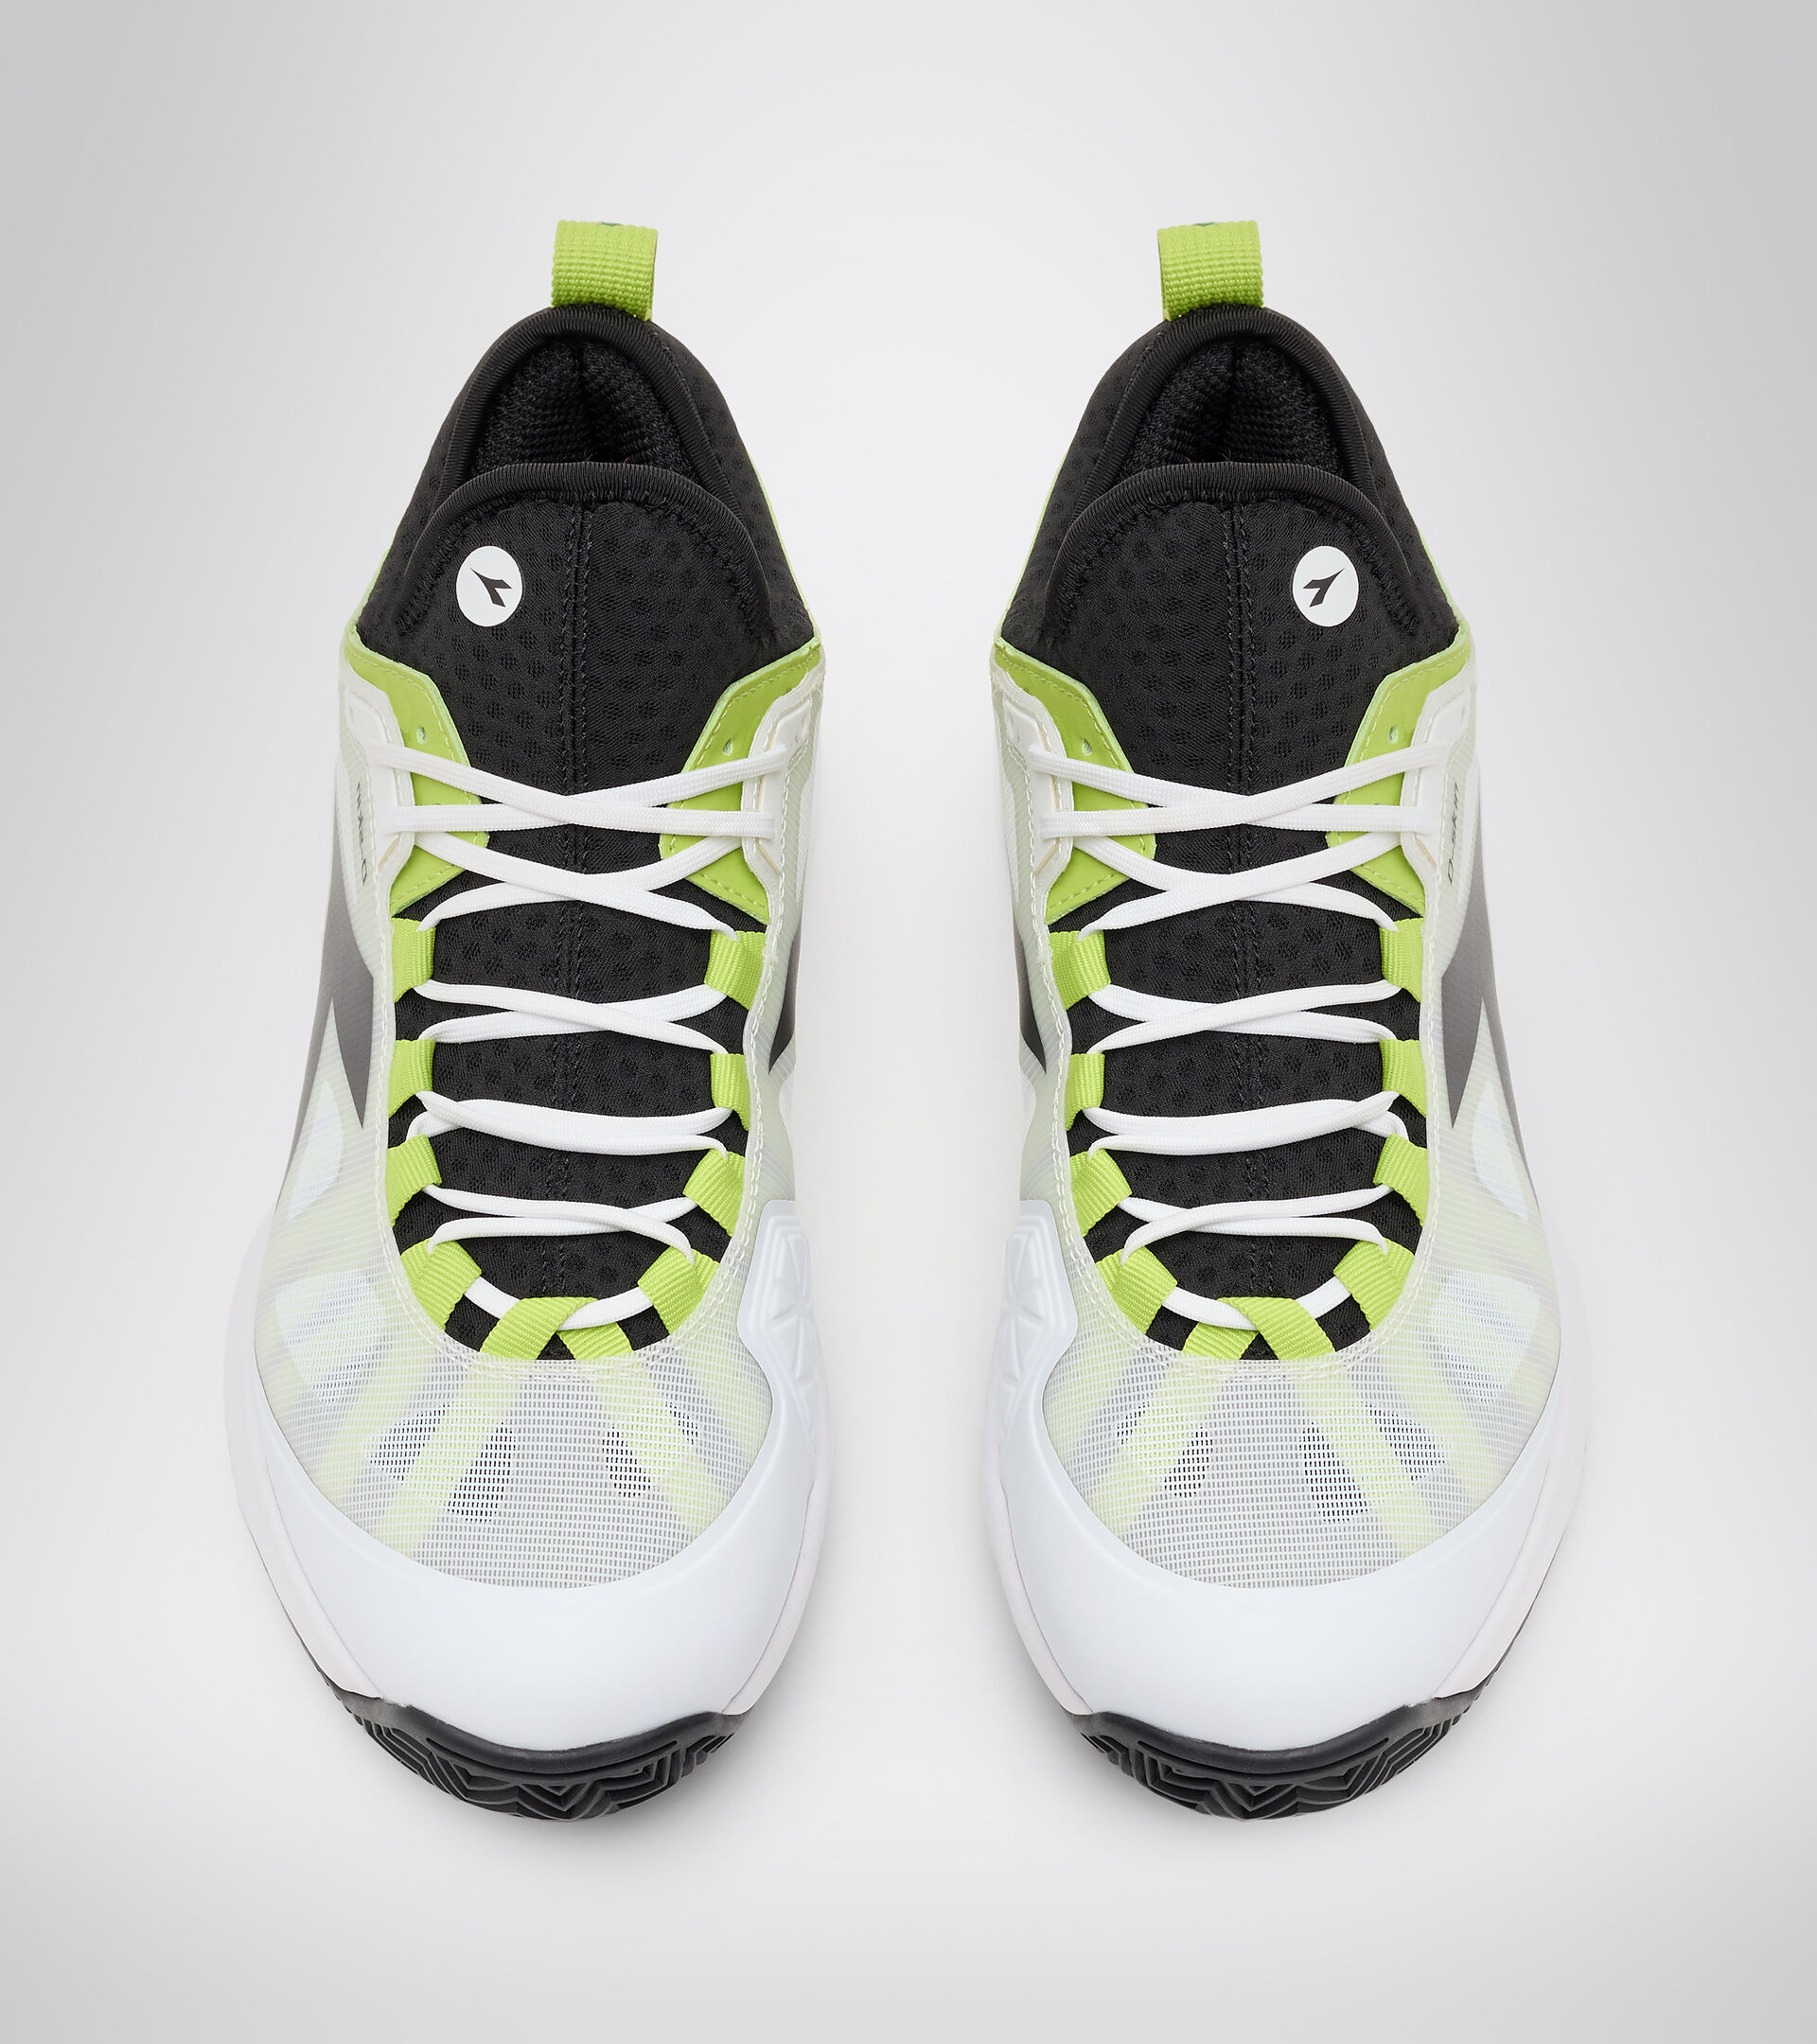 Clay court tennis shoe - Men SPEED BLUSHIELD FLY 3 + CLAY WHITE/BLACK/LIME GREEN - Diadora